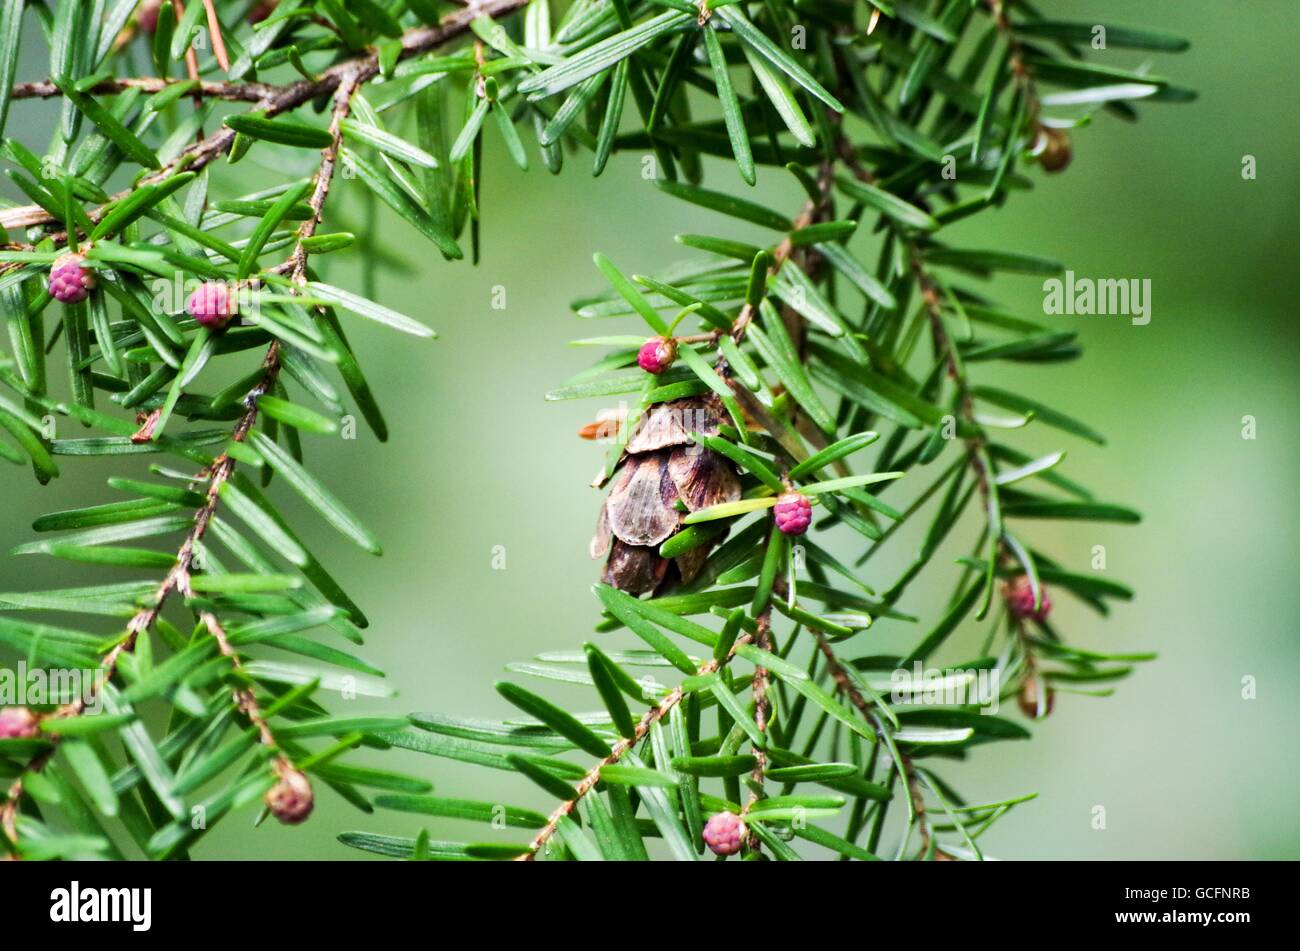 Western hemlock tree branch with pine cones. Comox Valley, British Columbia, Canada Stock Photo